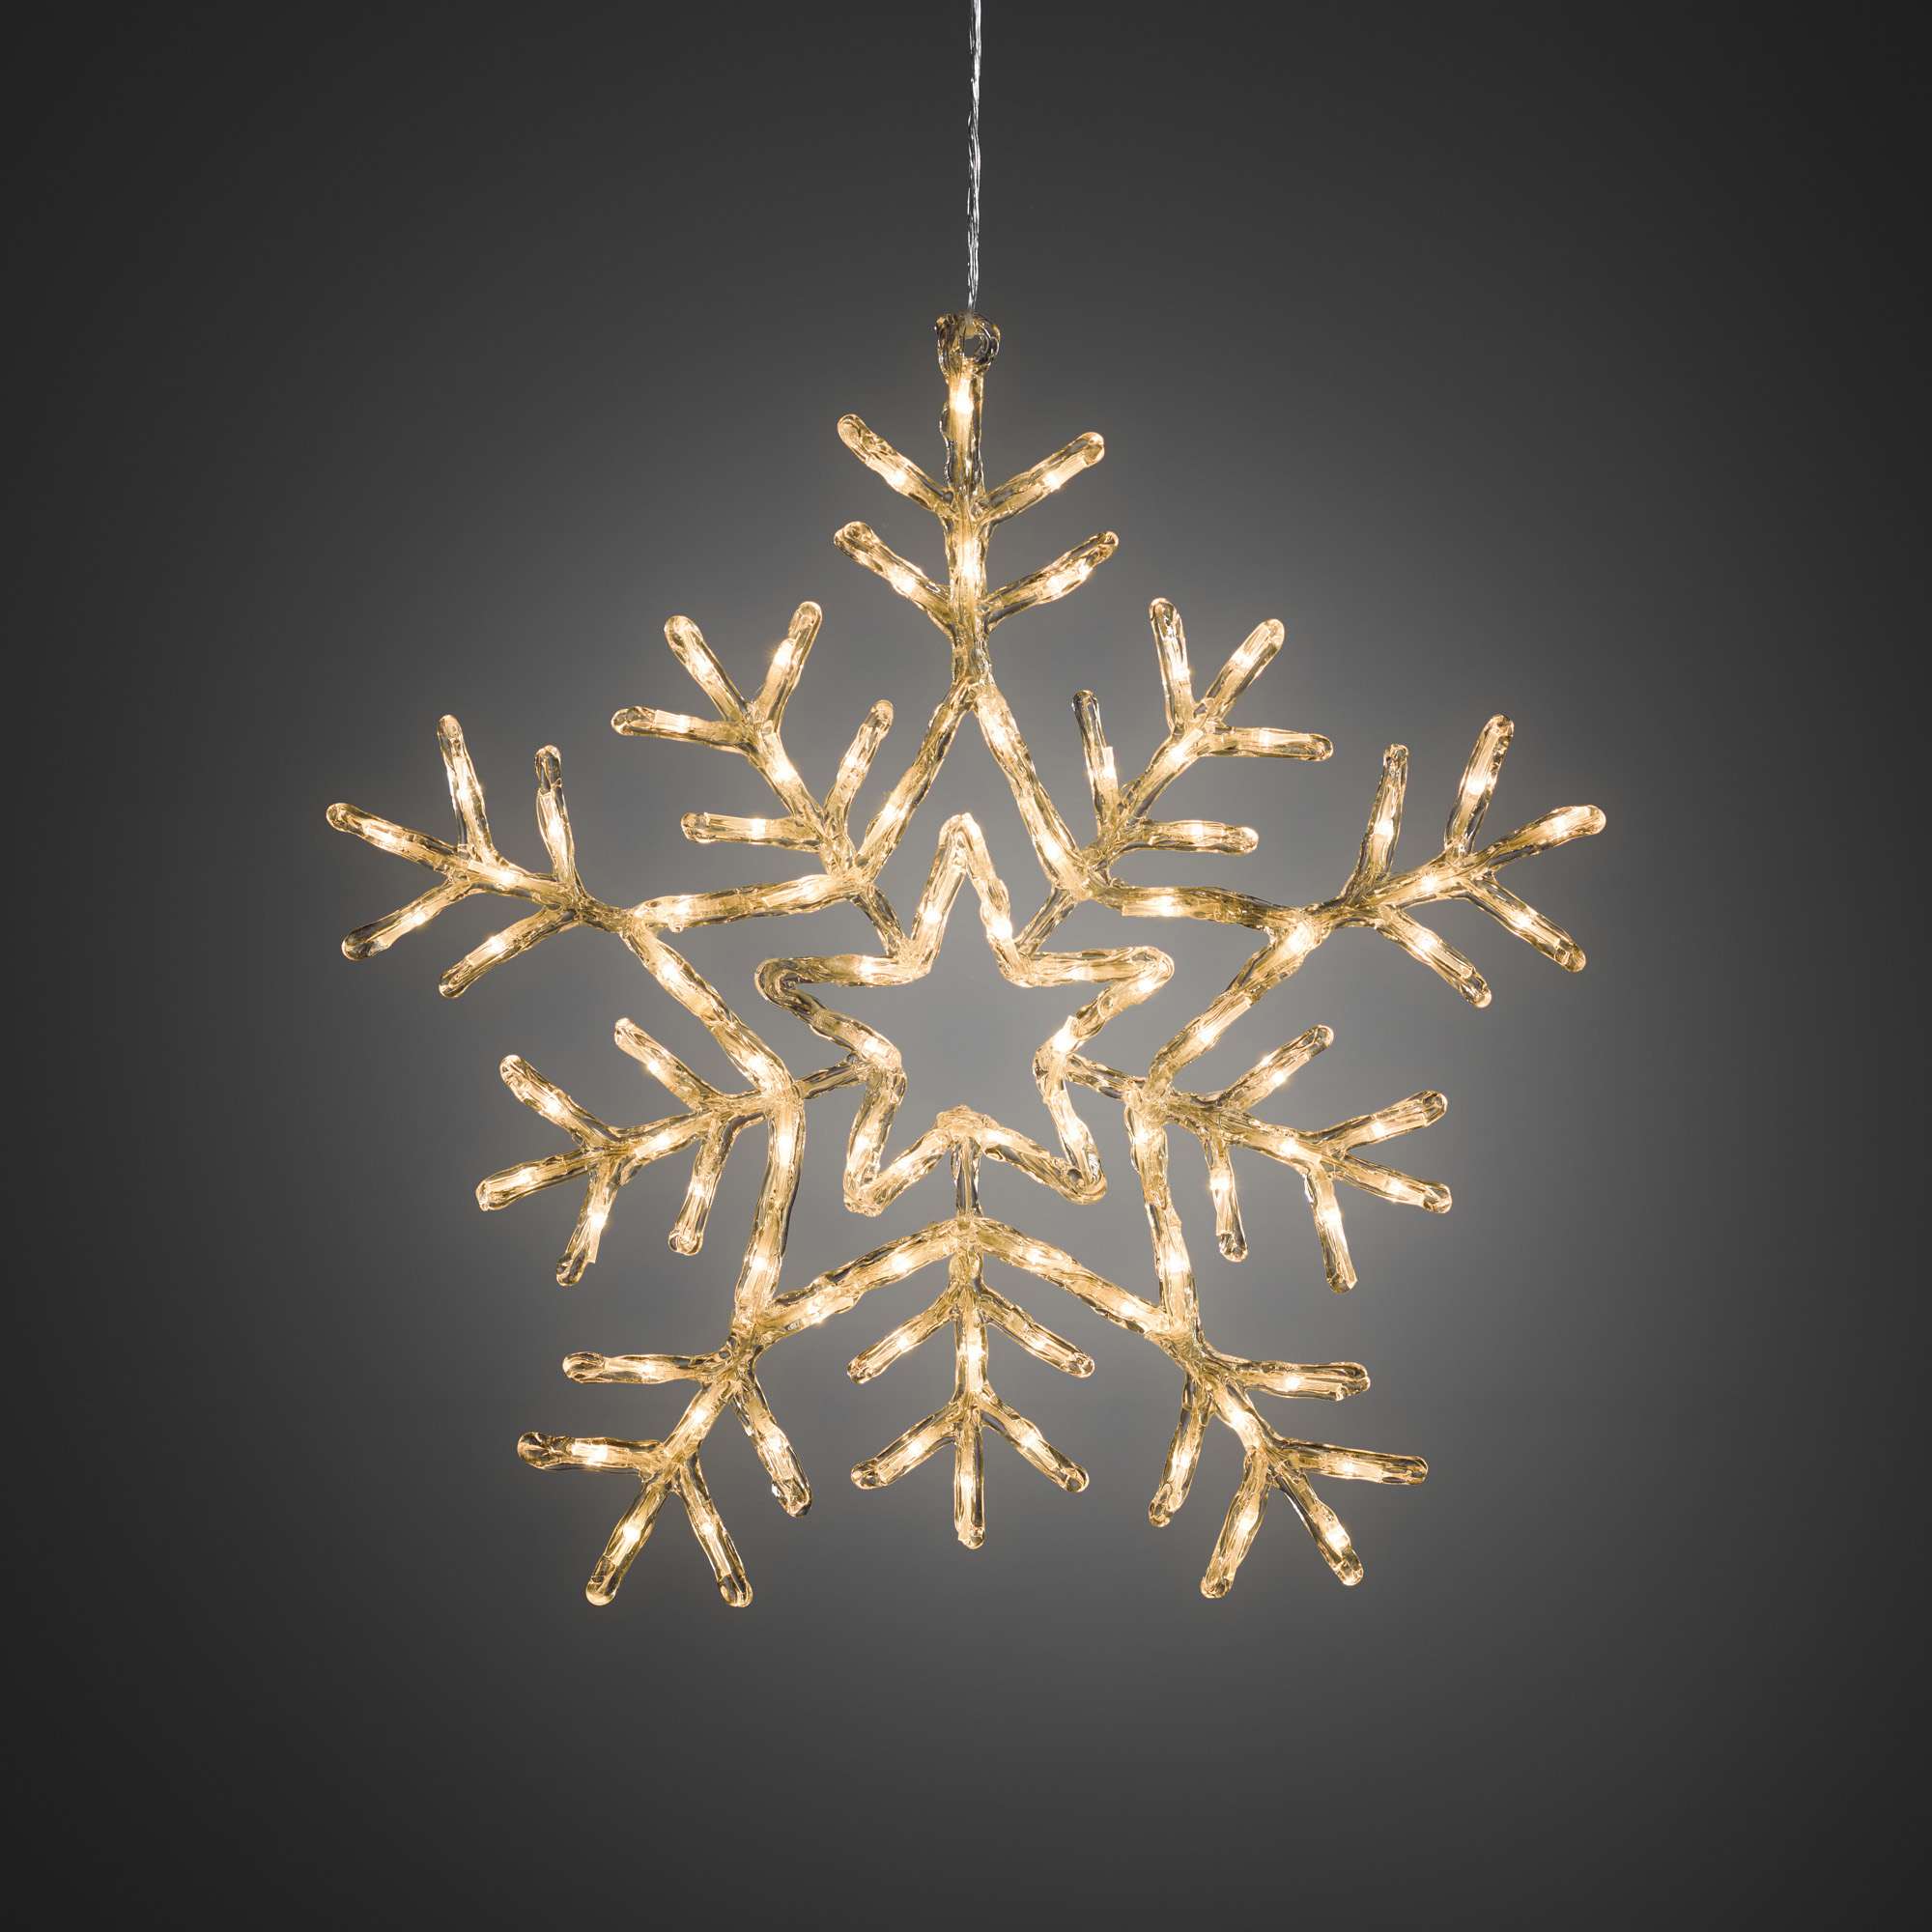 LED Acrylic Snowflake warm white, 90 LEDs, with 8 Functions